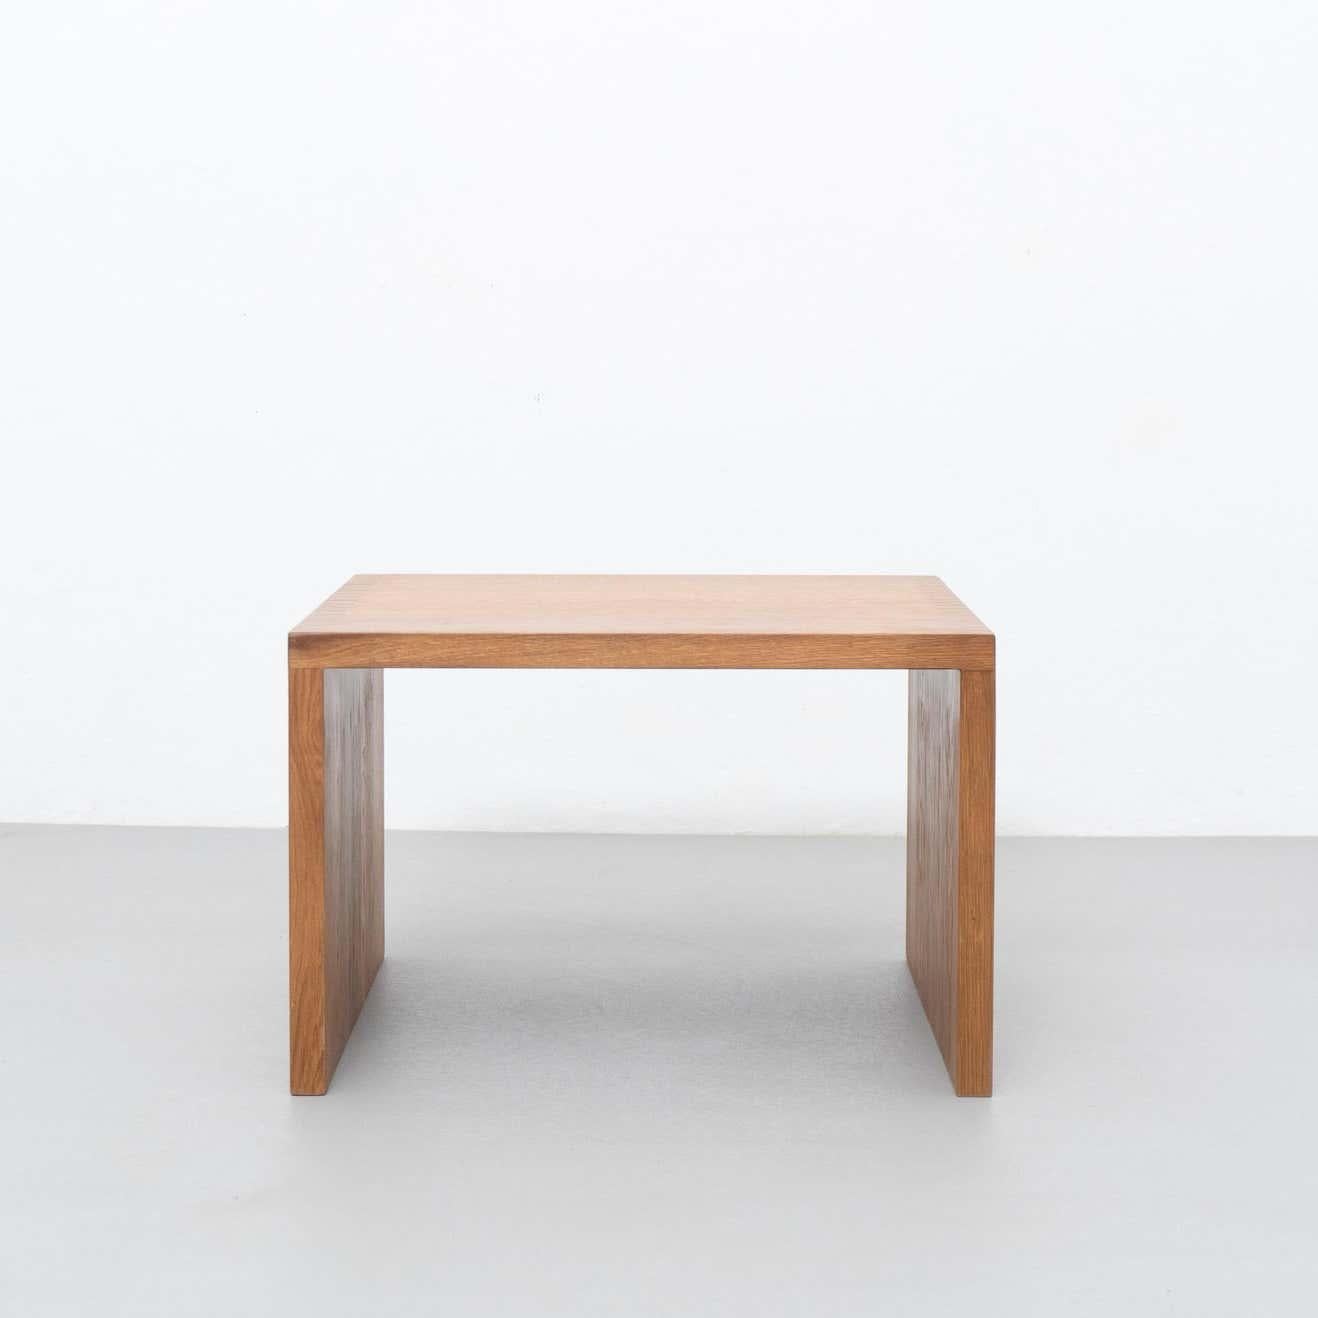 Spanish Dada Est. Contemporary Solid Oak Low Table